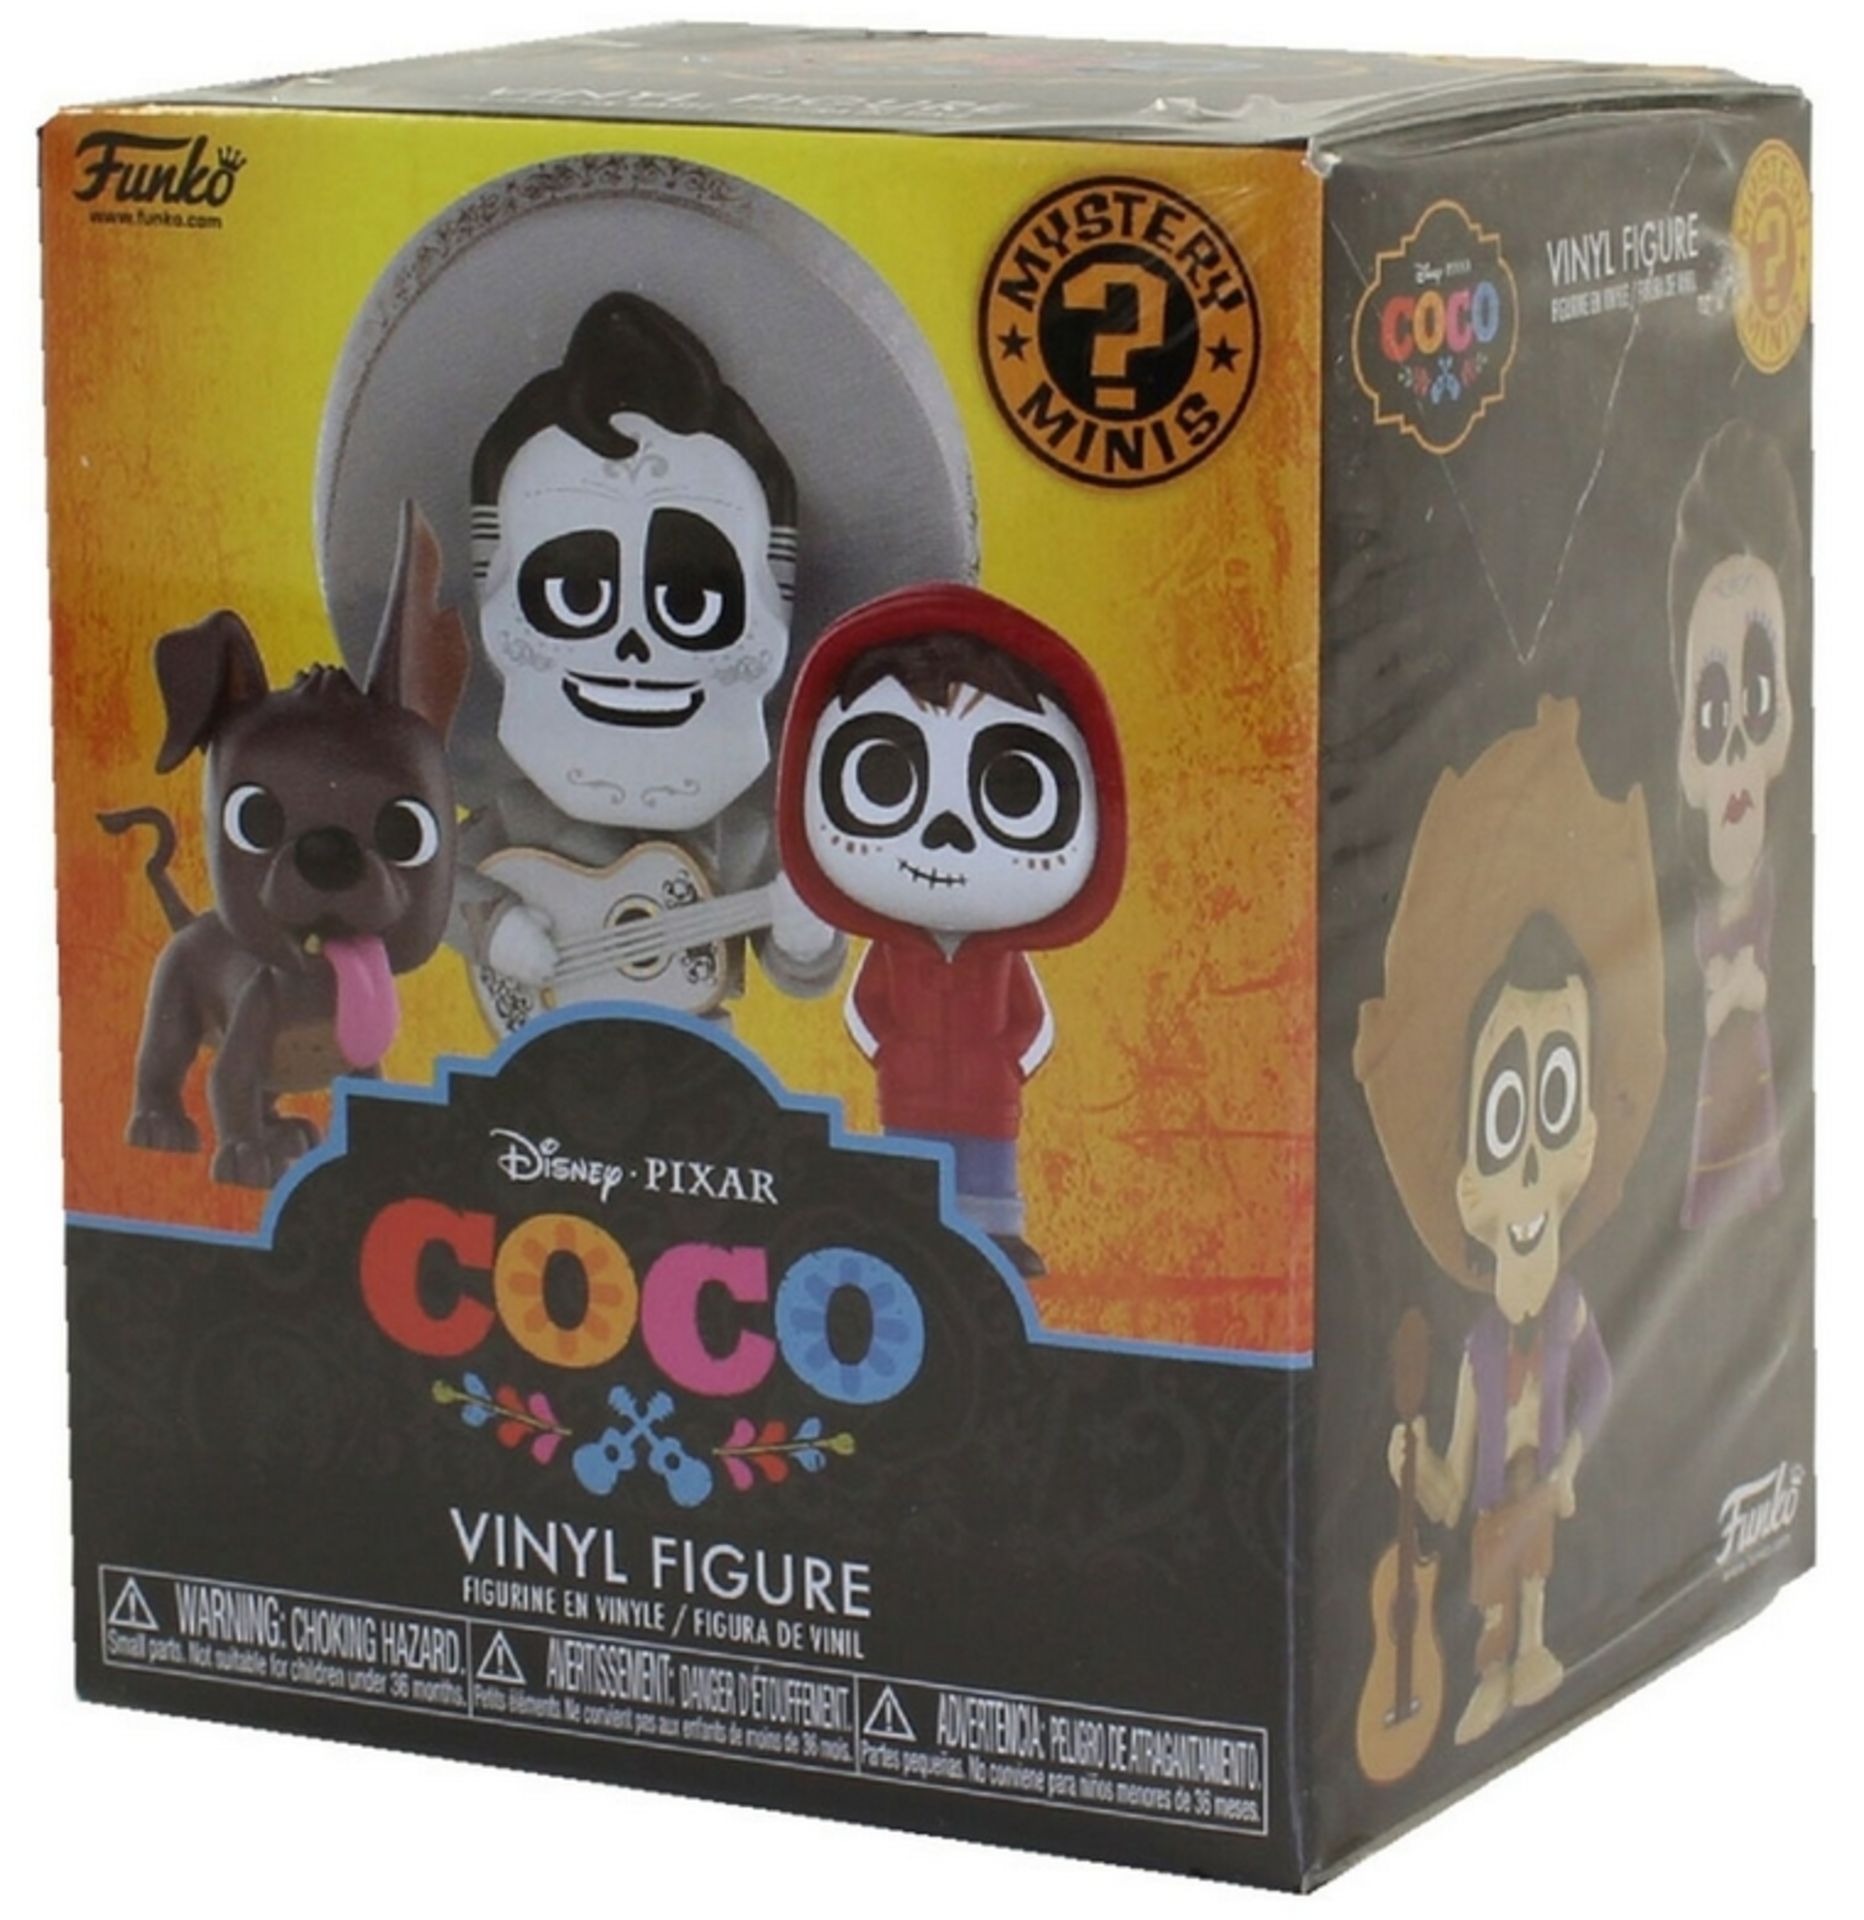 8x Funko Disney Pixar's COCO Mystery Mini Vinyl Figure Blind Boxes